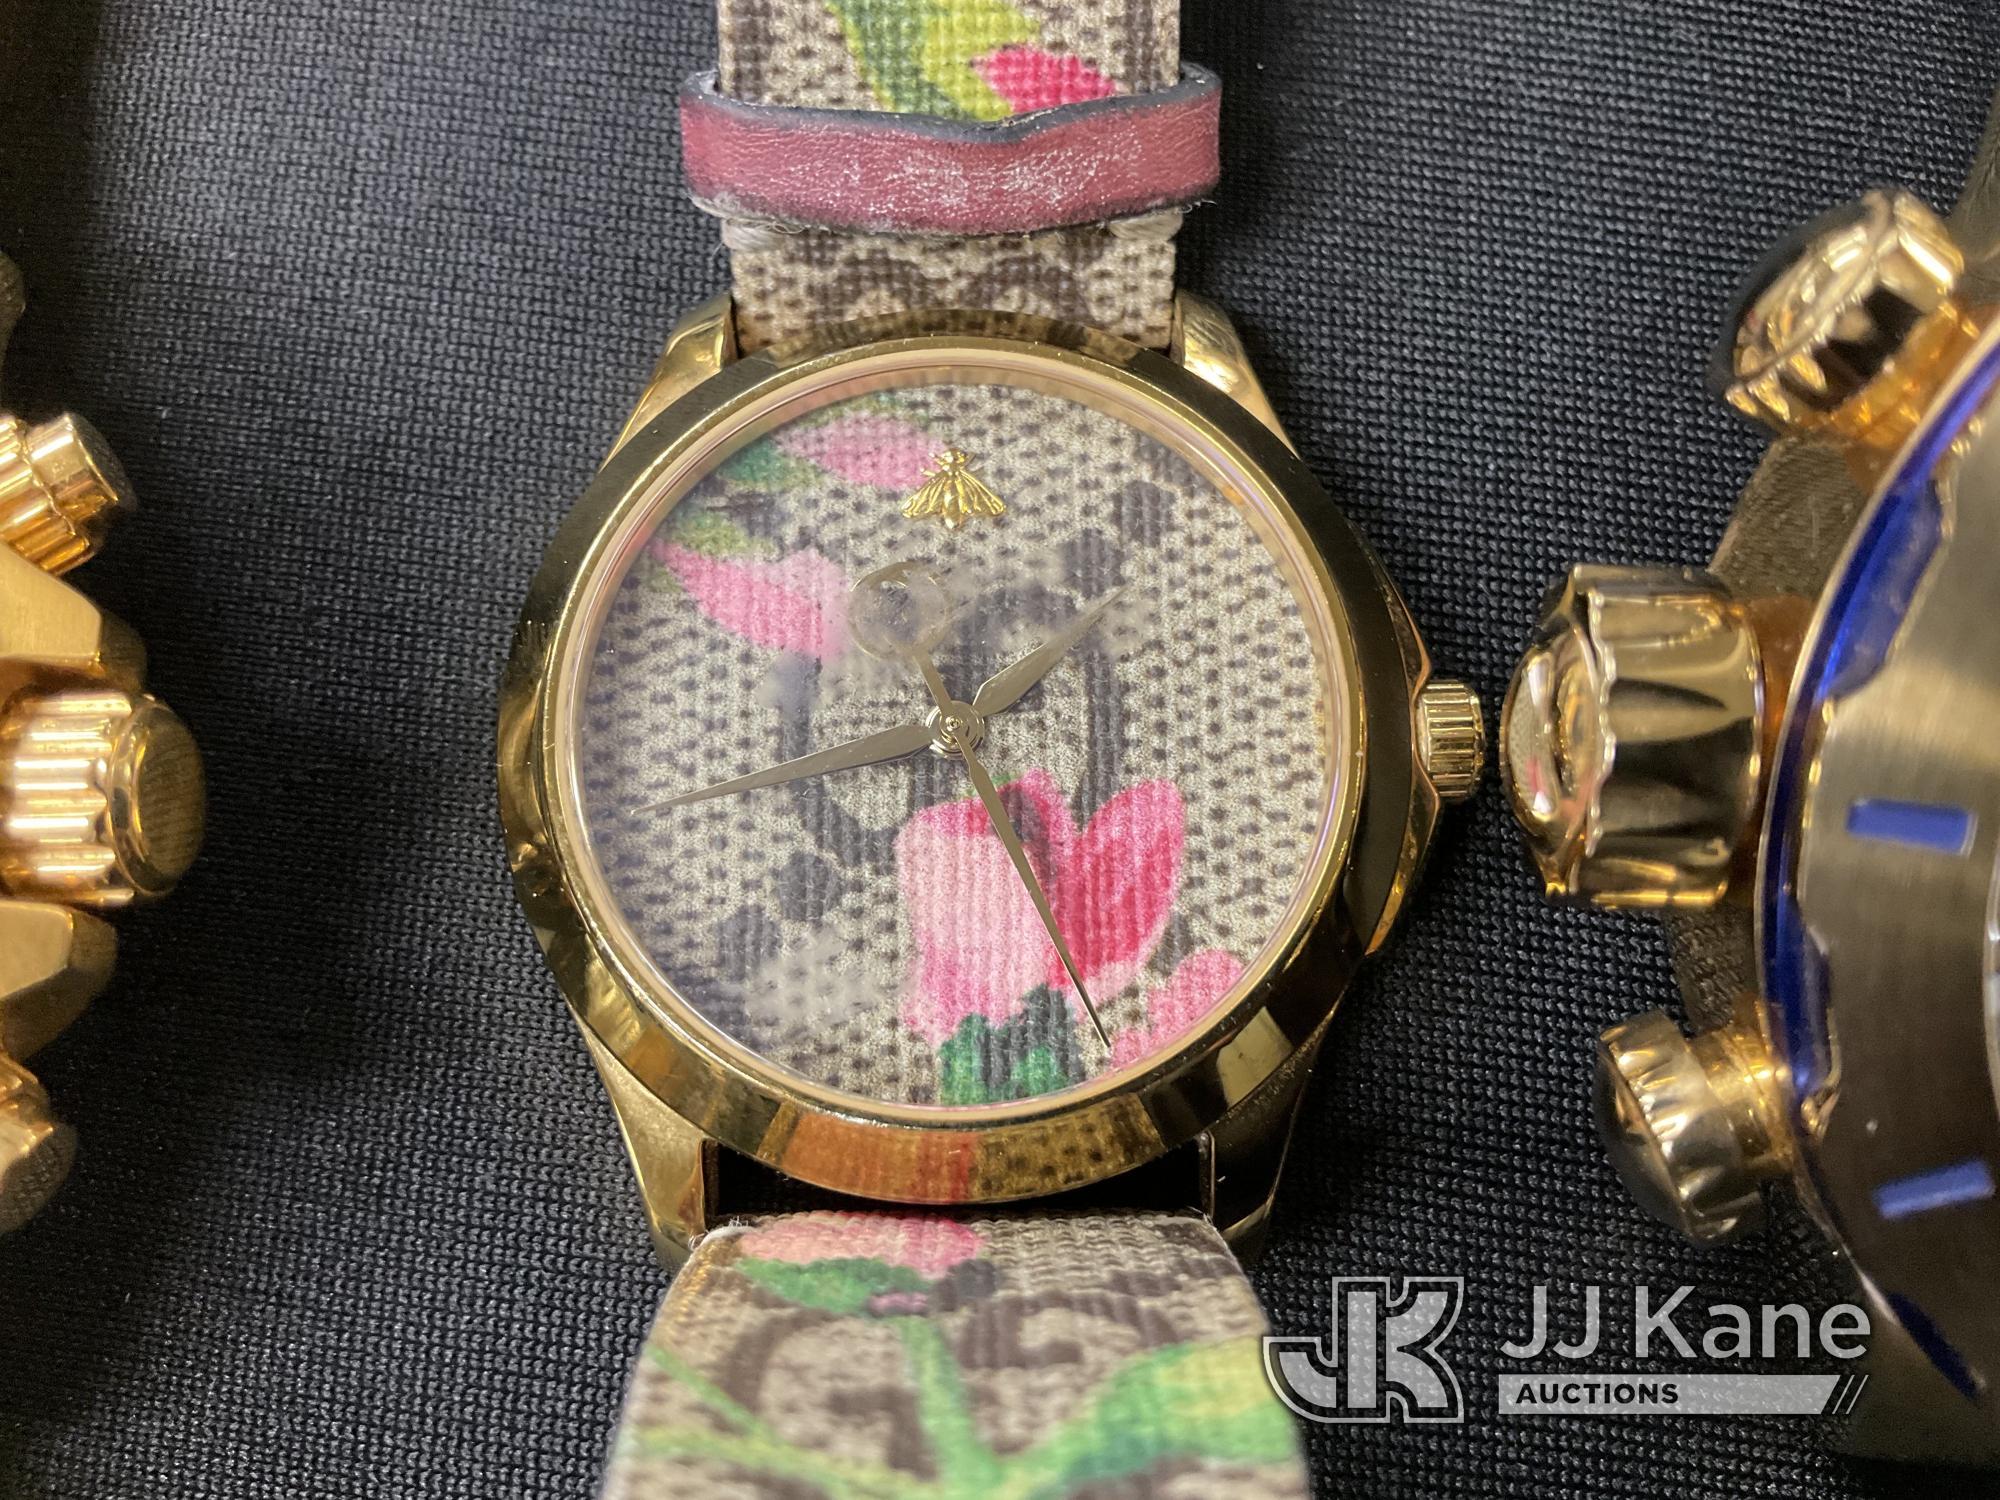 (Jurupa Valley, CA) 7 Watches Used